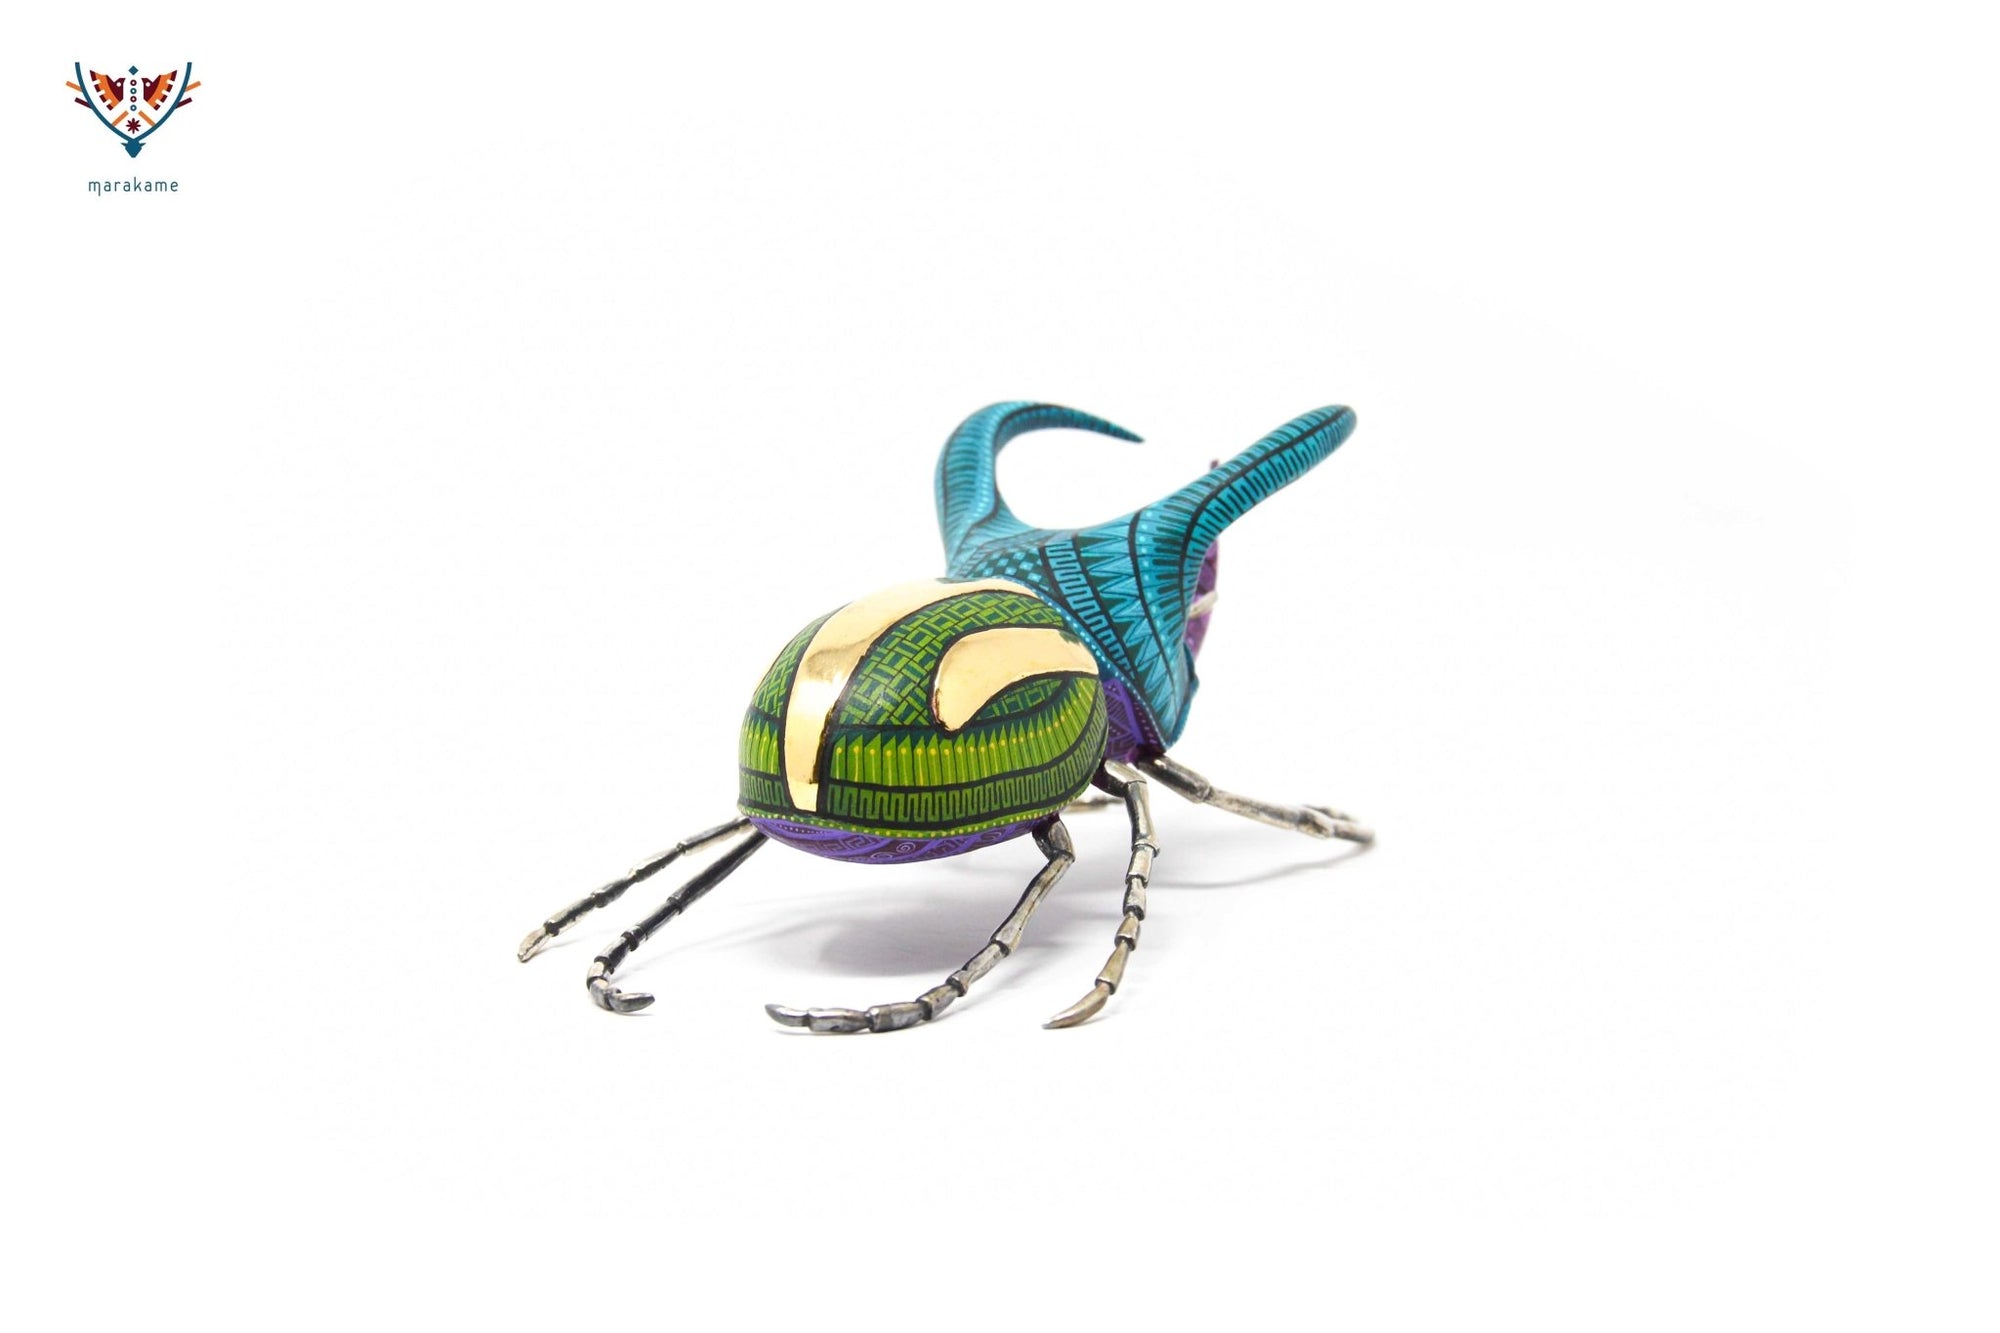 Escarabajo macho - Witol yee mash IV - Arte Huichol - Marakame